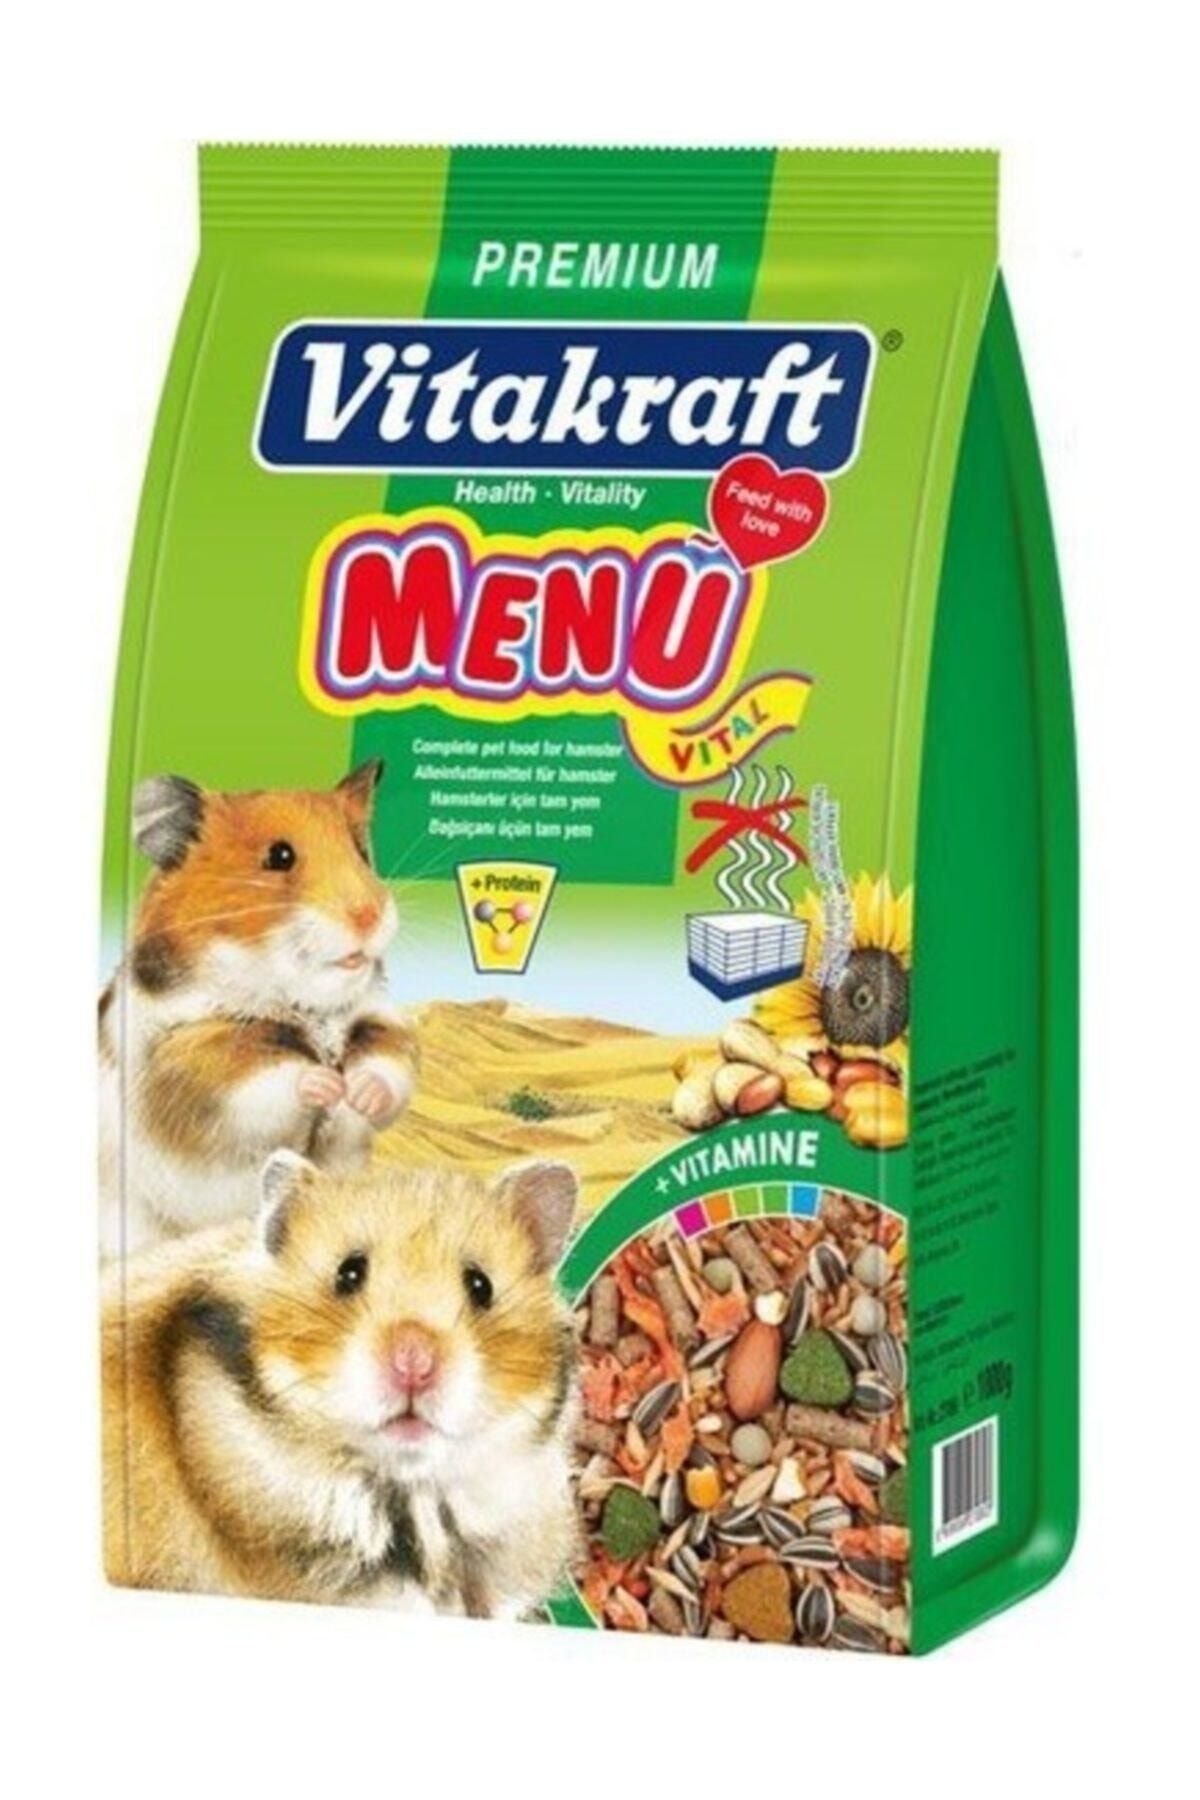 Vitakraft Menü Hamster Yemi 1000 gr